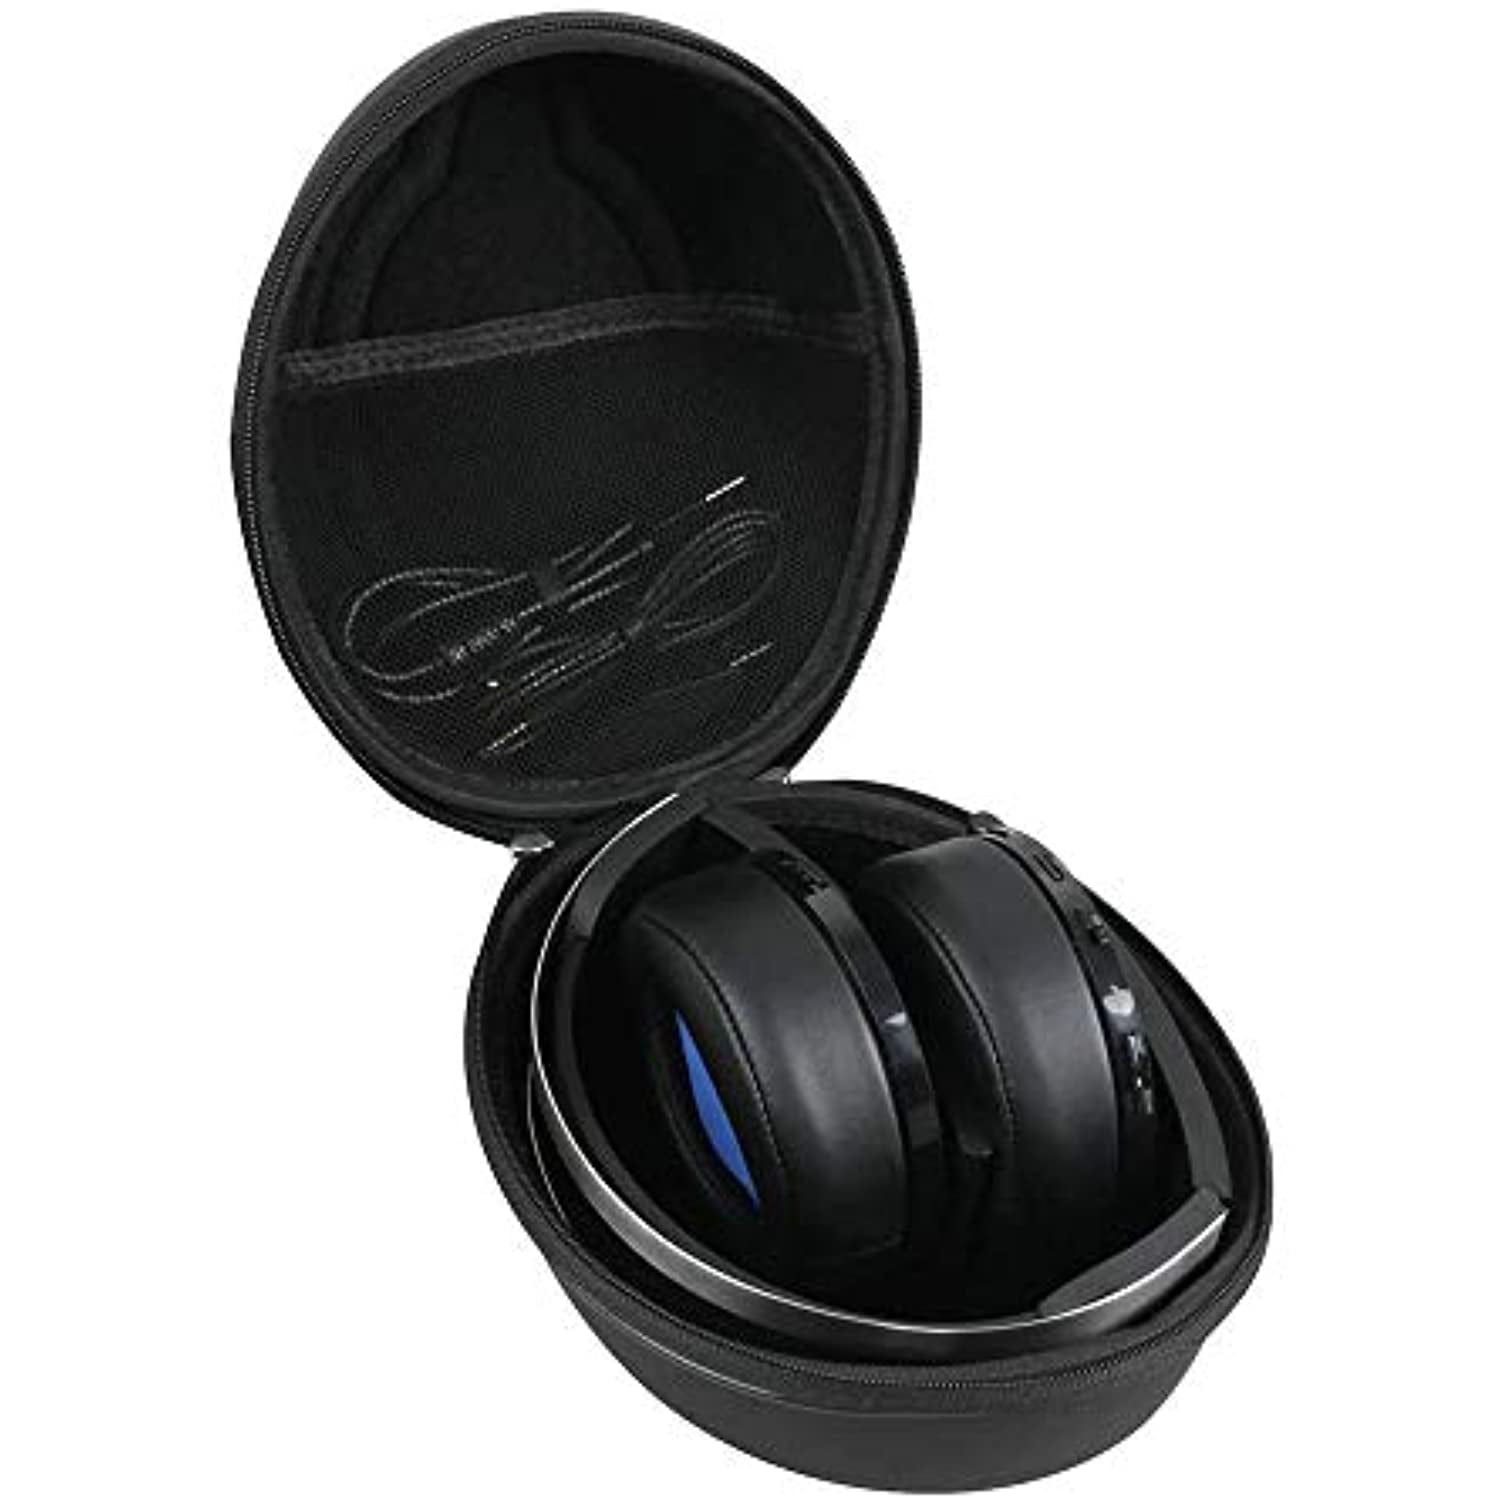 Hermitshell Hard EVA Travel Black Case Fits ZoeeTree S1 Wireless Bluetooth Speaker Outdoor Portable Stereo Speaker 